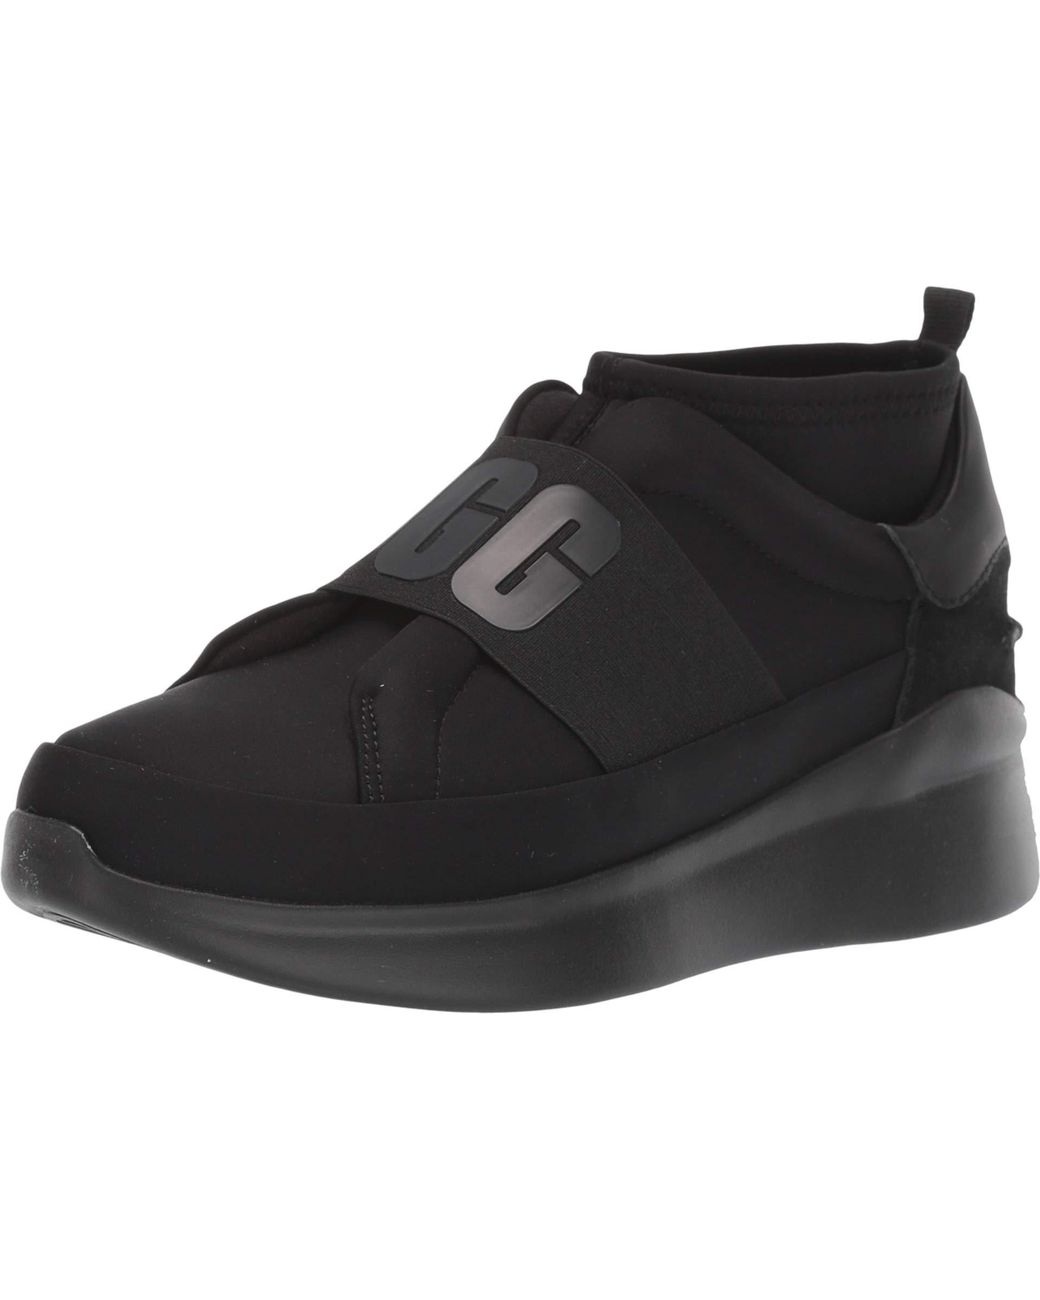 UGG Neoprene Neutra Sneaker in Black - Lyst